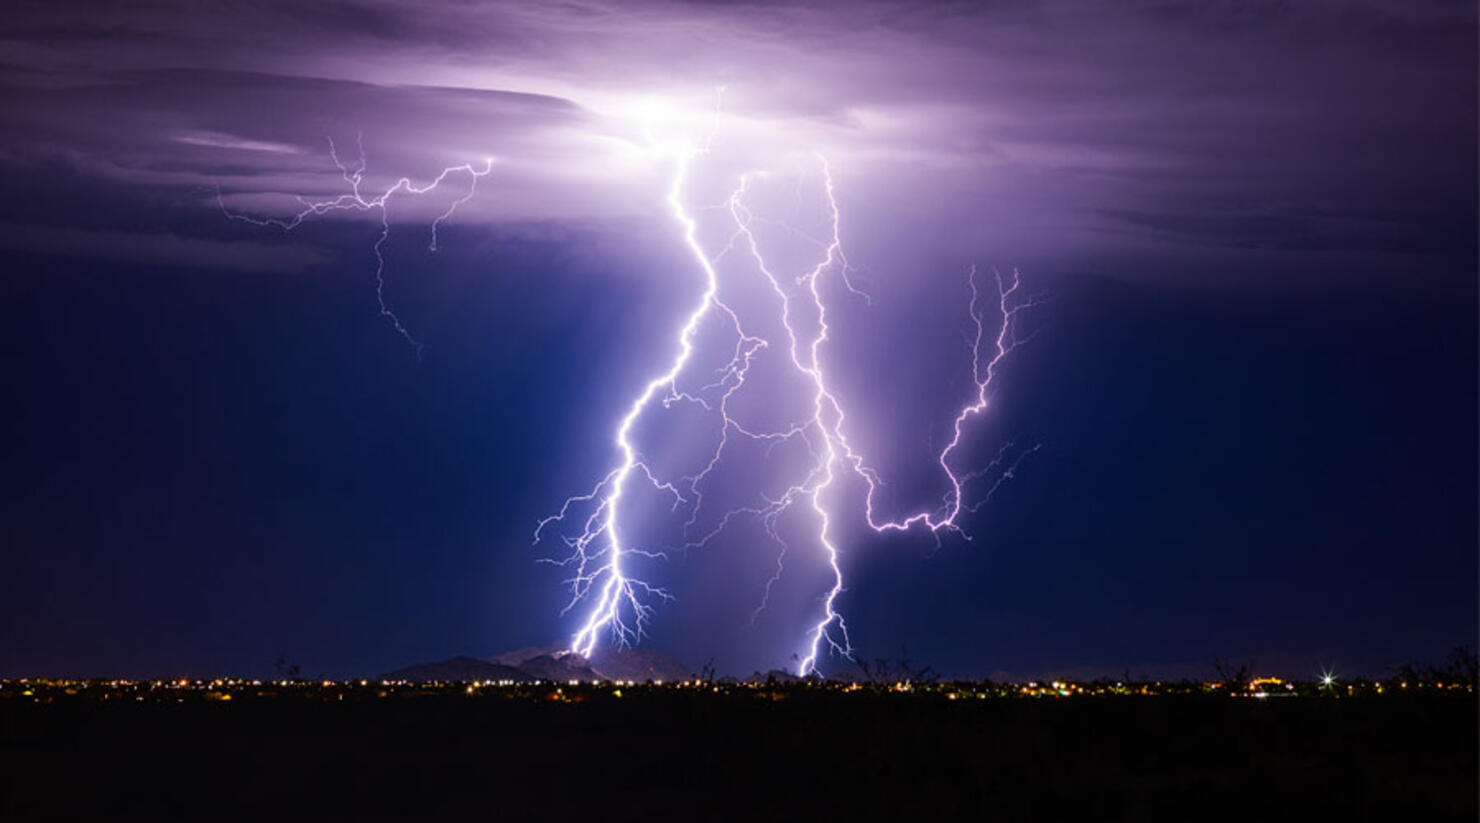 Thundersnow: How a snowstorm produces lightning